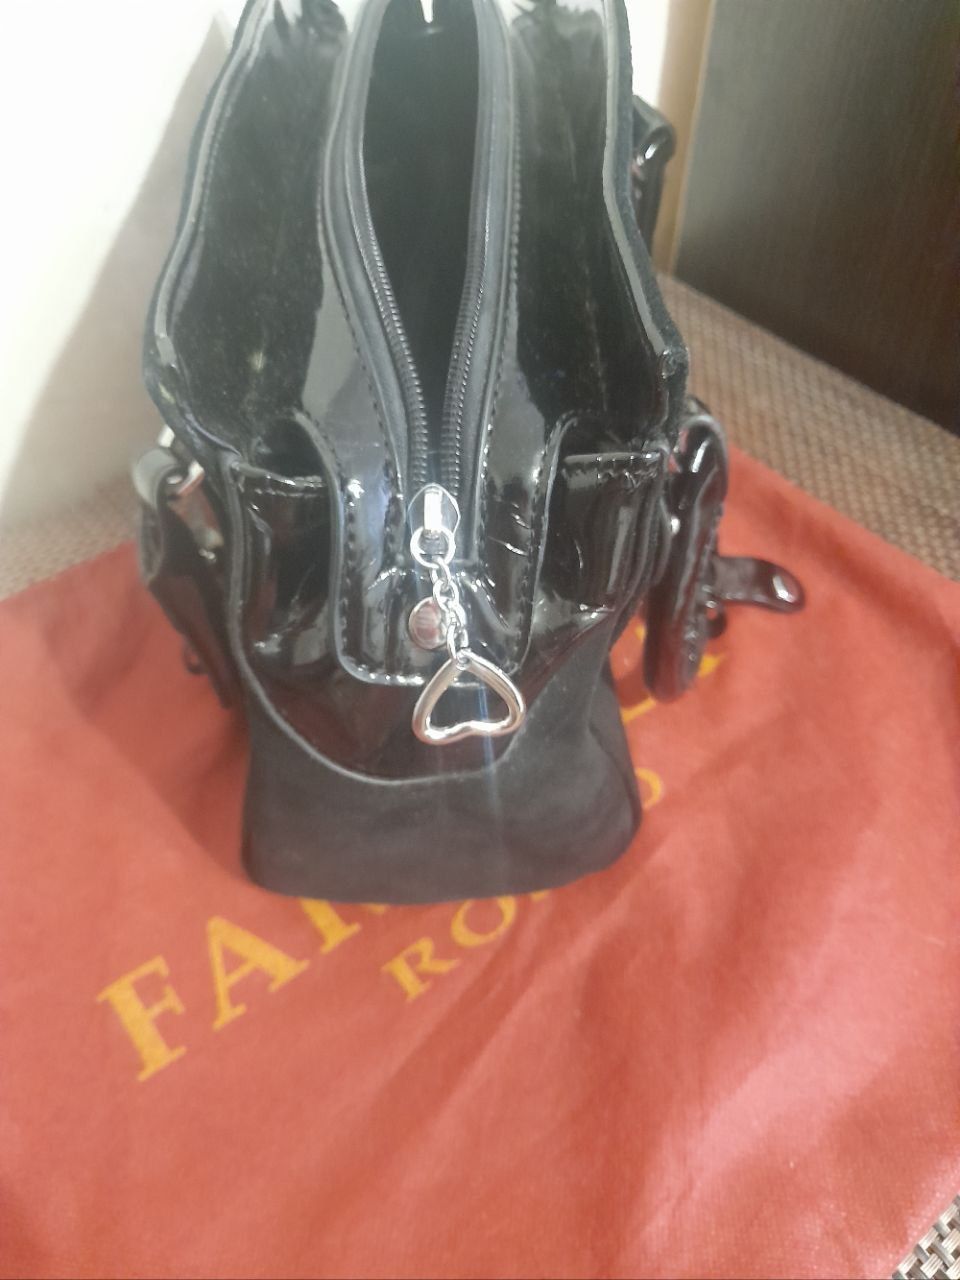 Женская сумка Farfalla Rosso